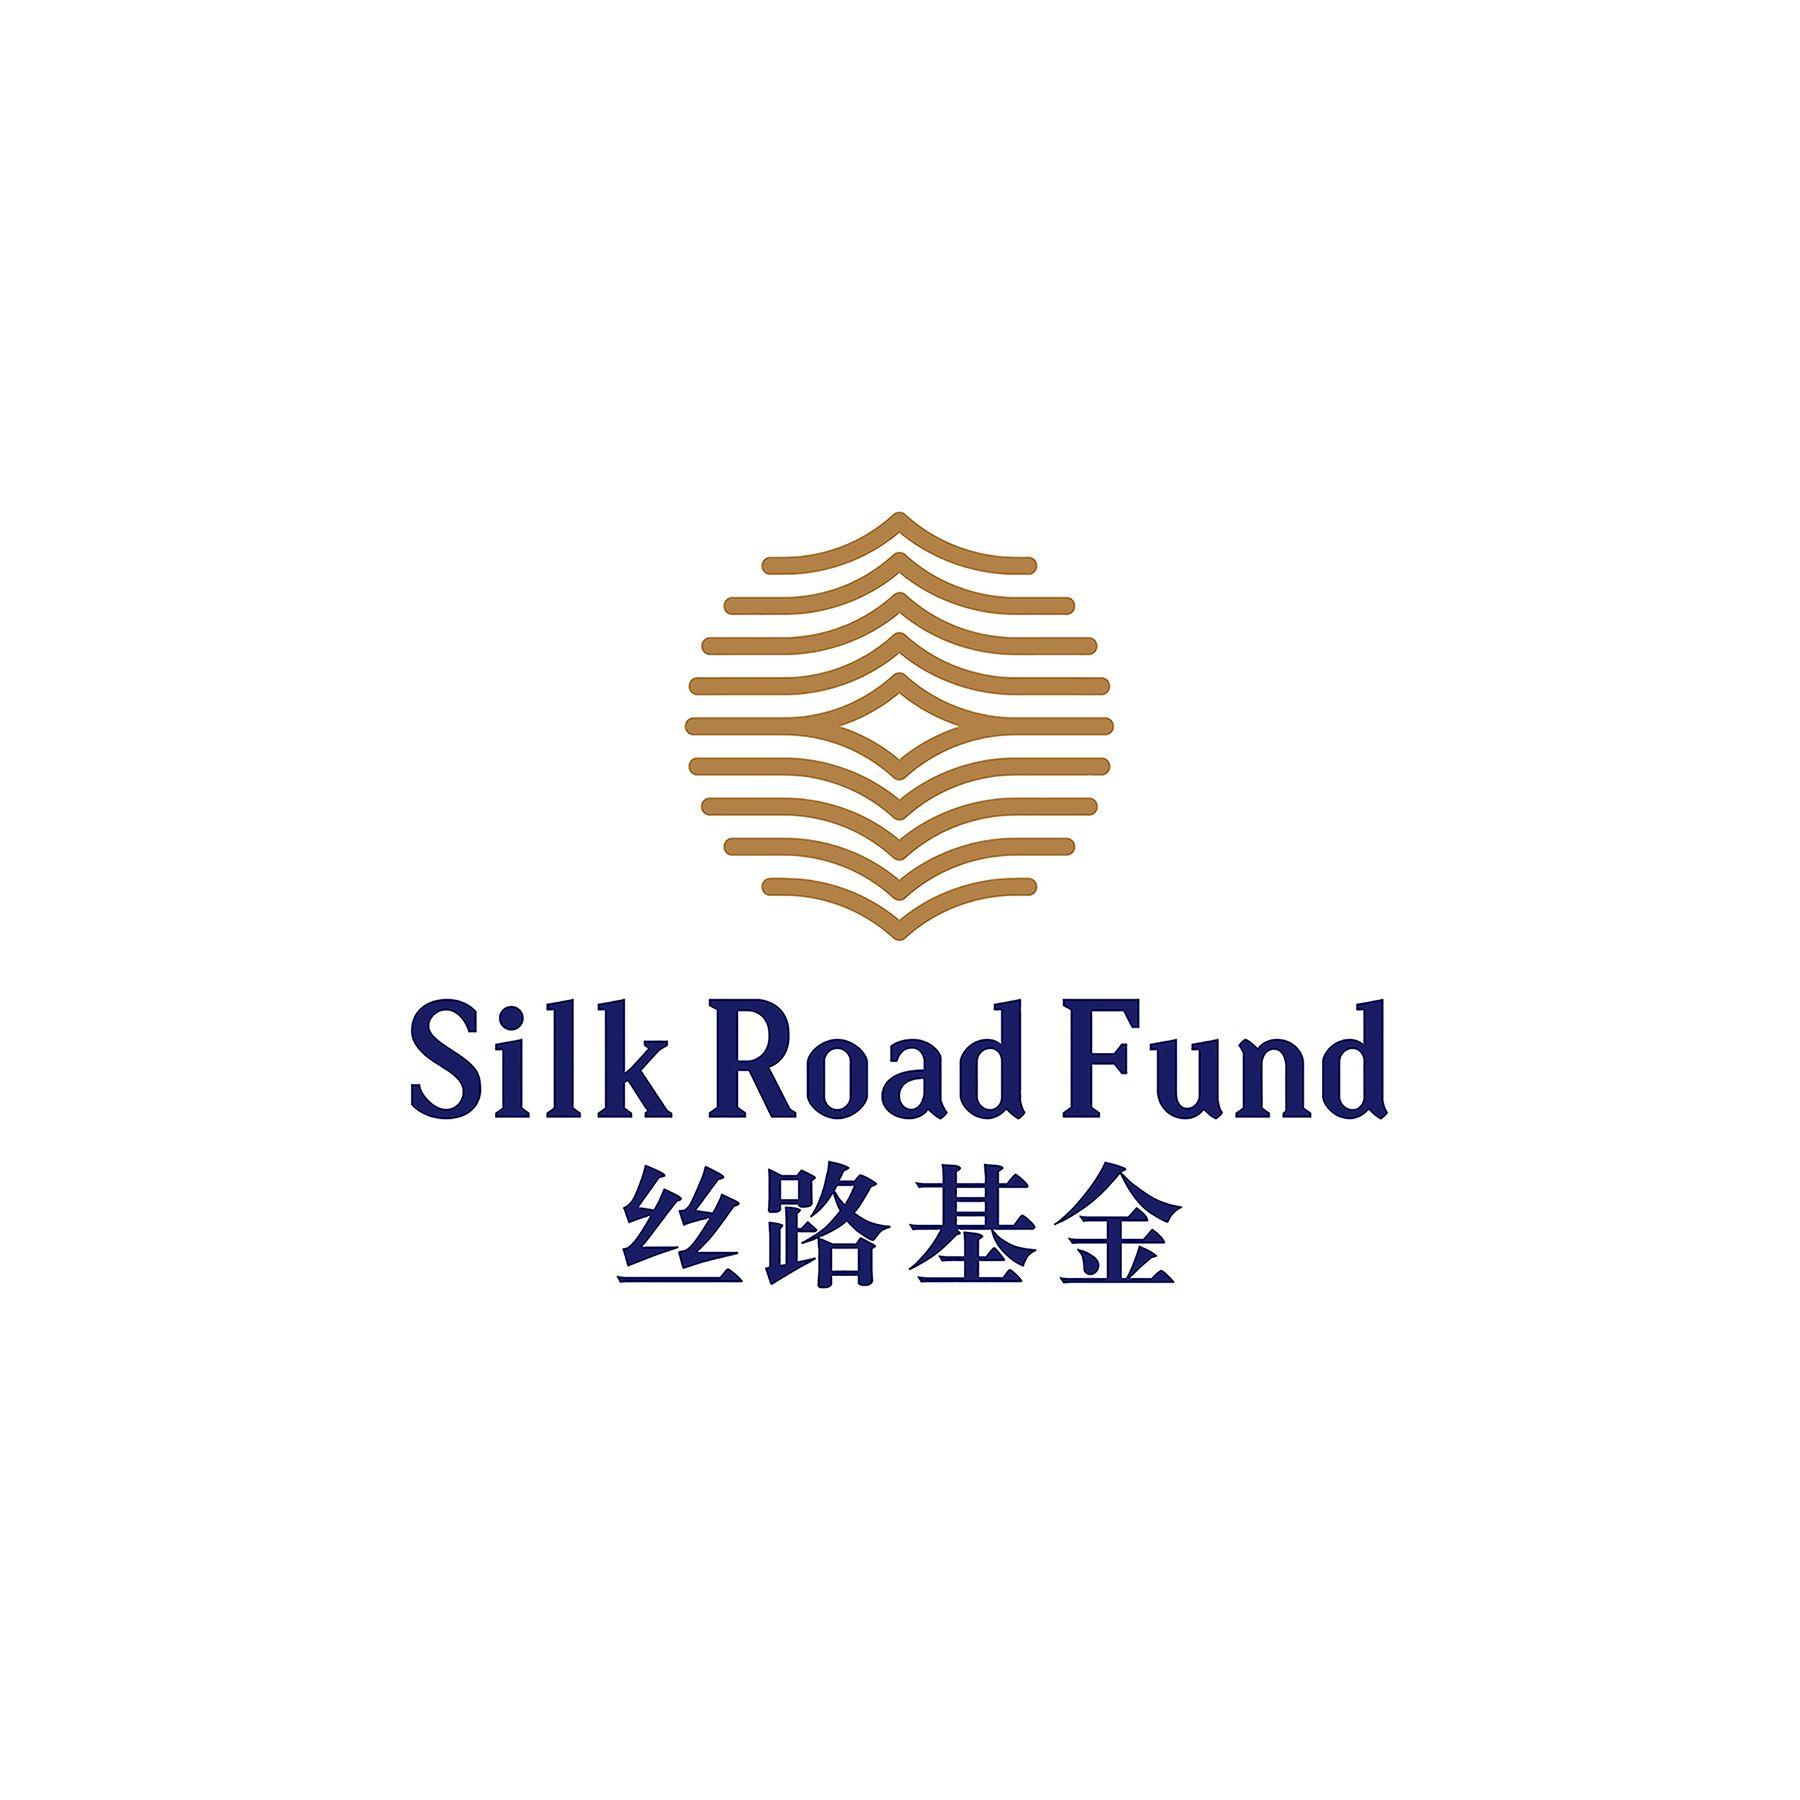 Fund Logo - Silk Road Fund Logo and VI